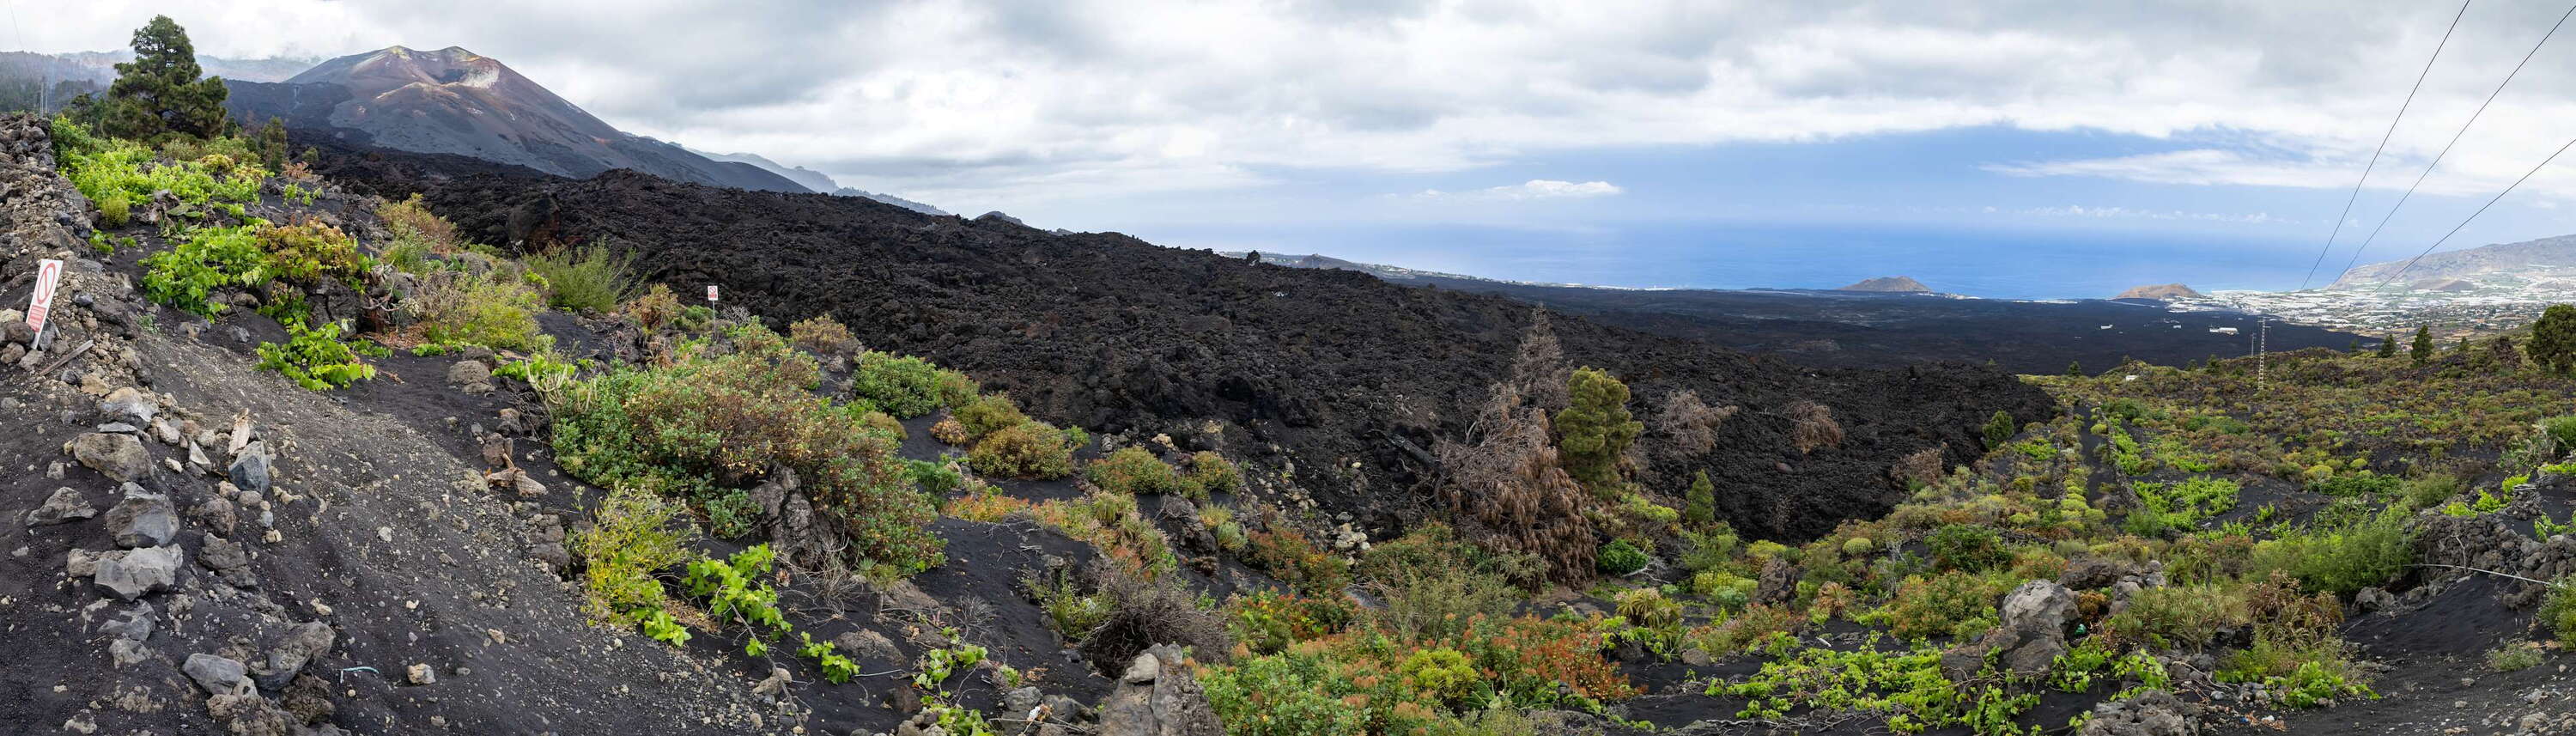 Volcán de Tajogaite with lava field